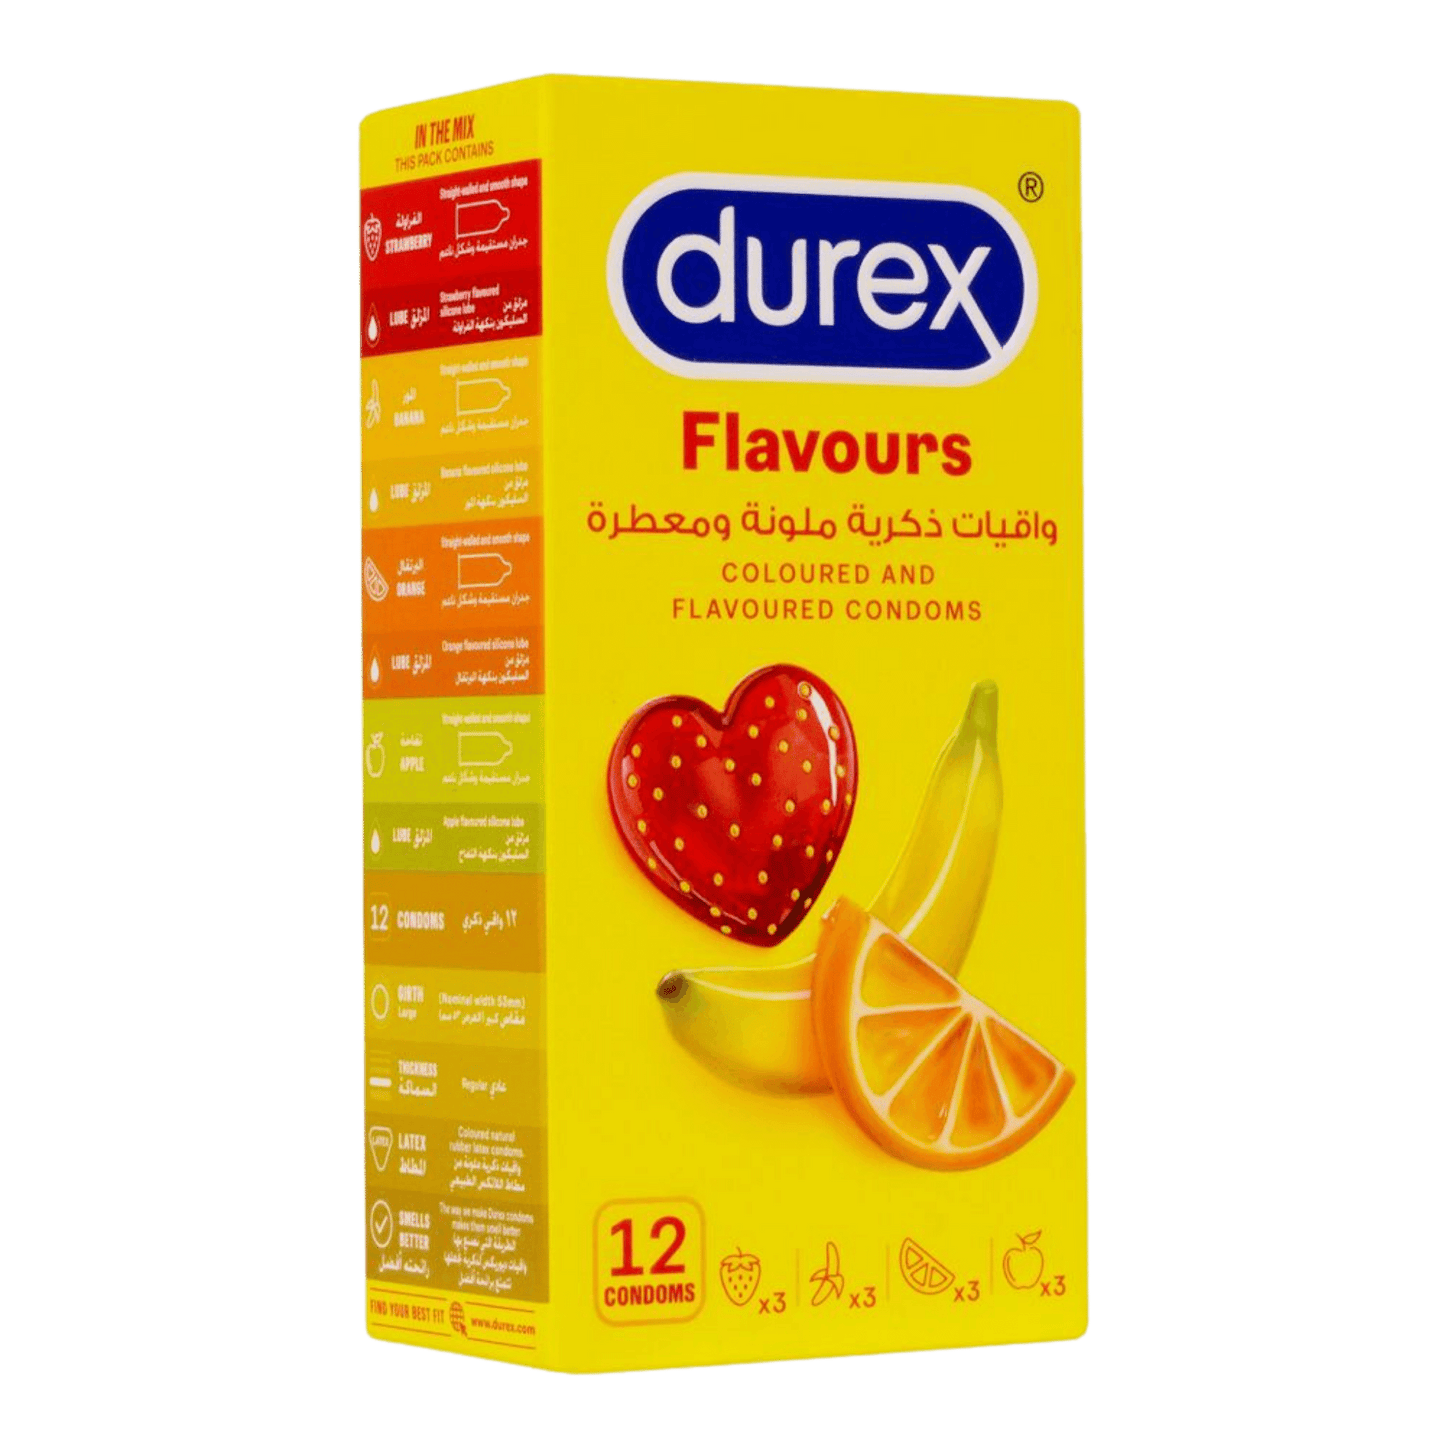 Durex flavours - coloured & flavoured condoms (Pack of 12 condoms)